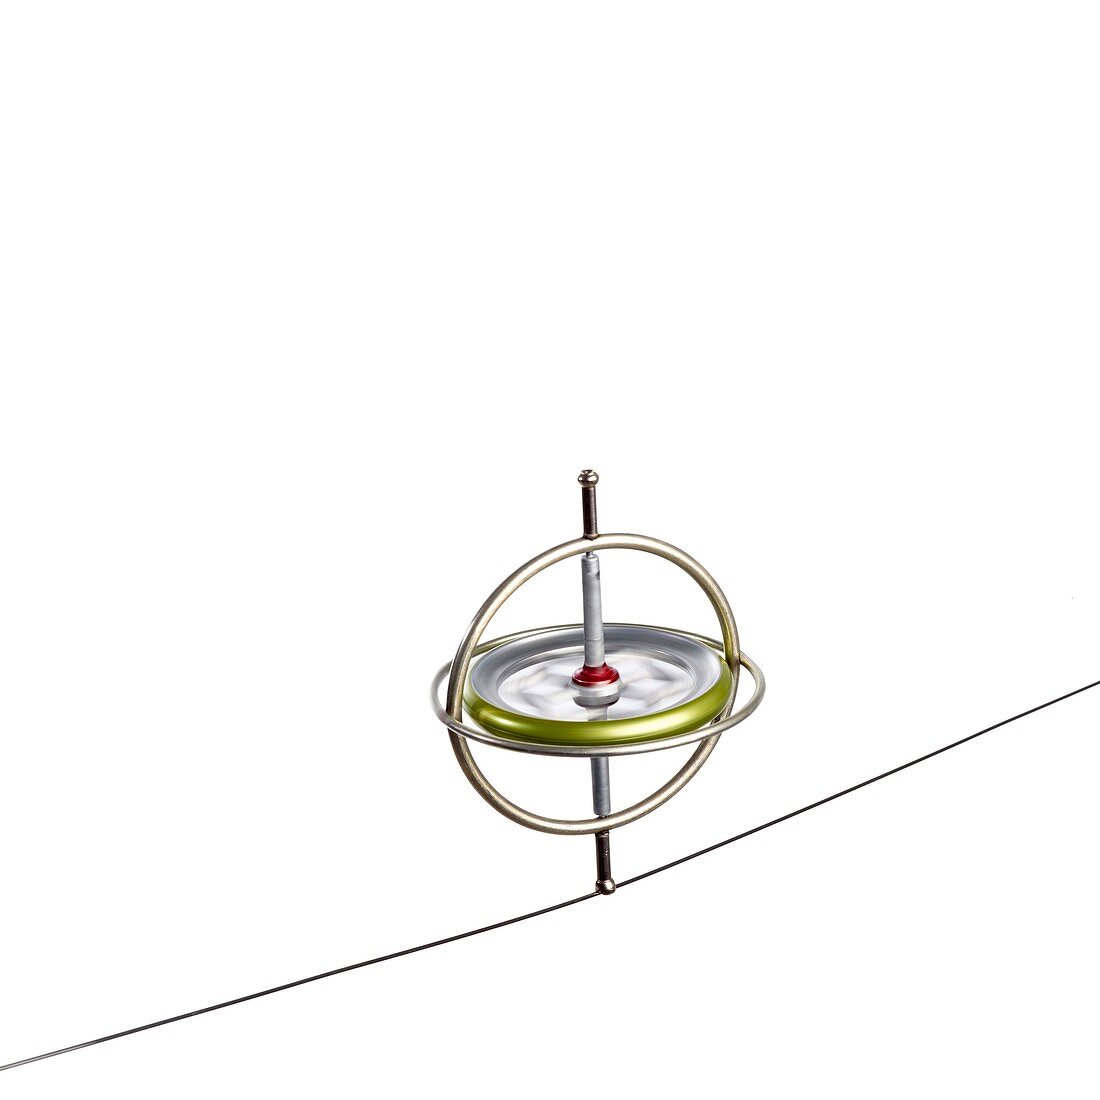 Gyroscope balancing on a wire